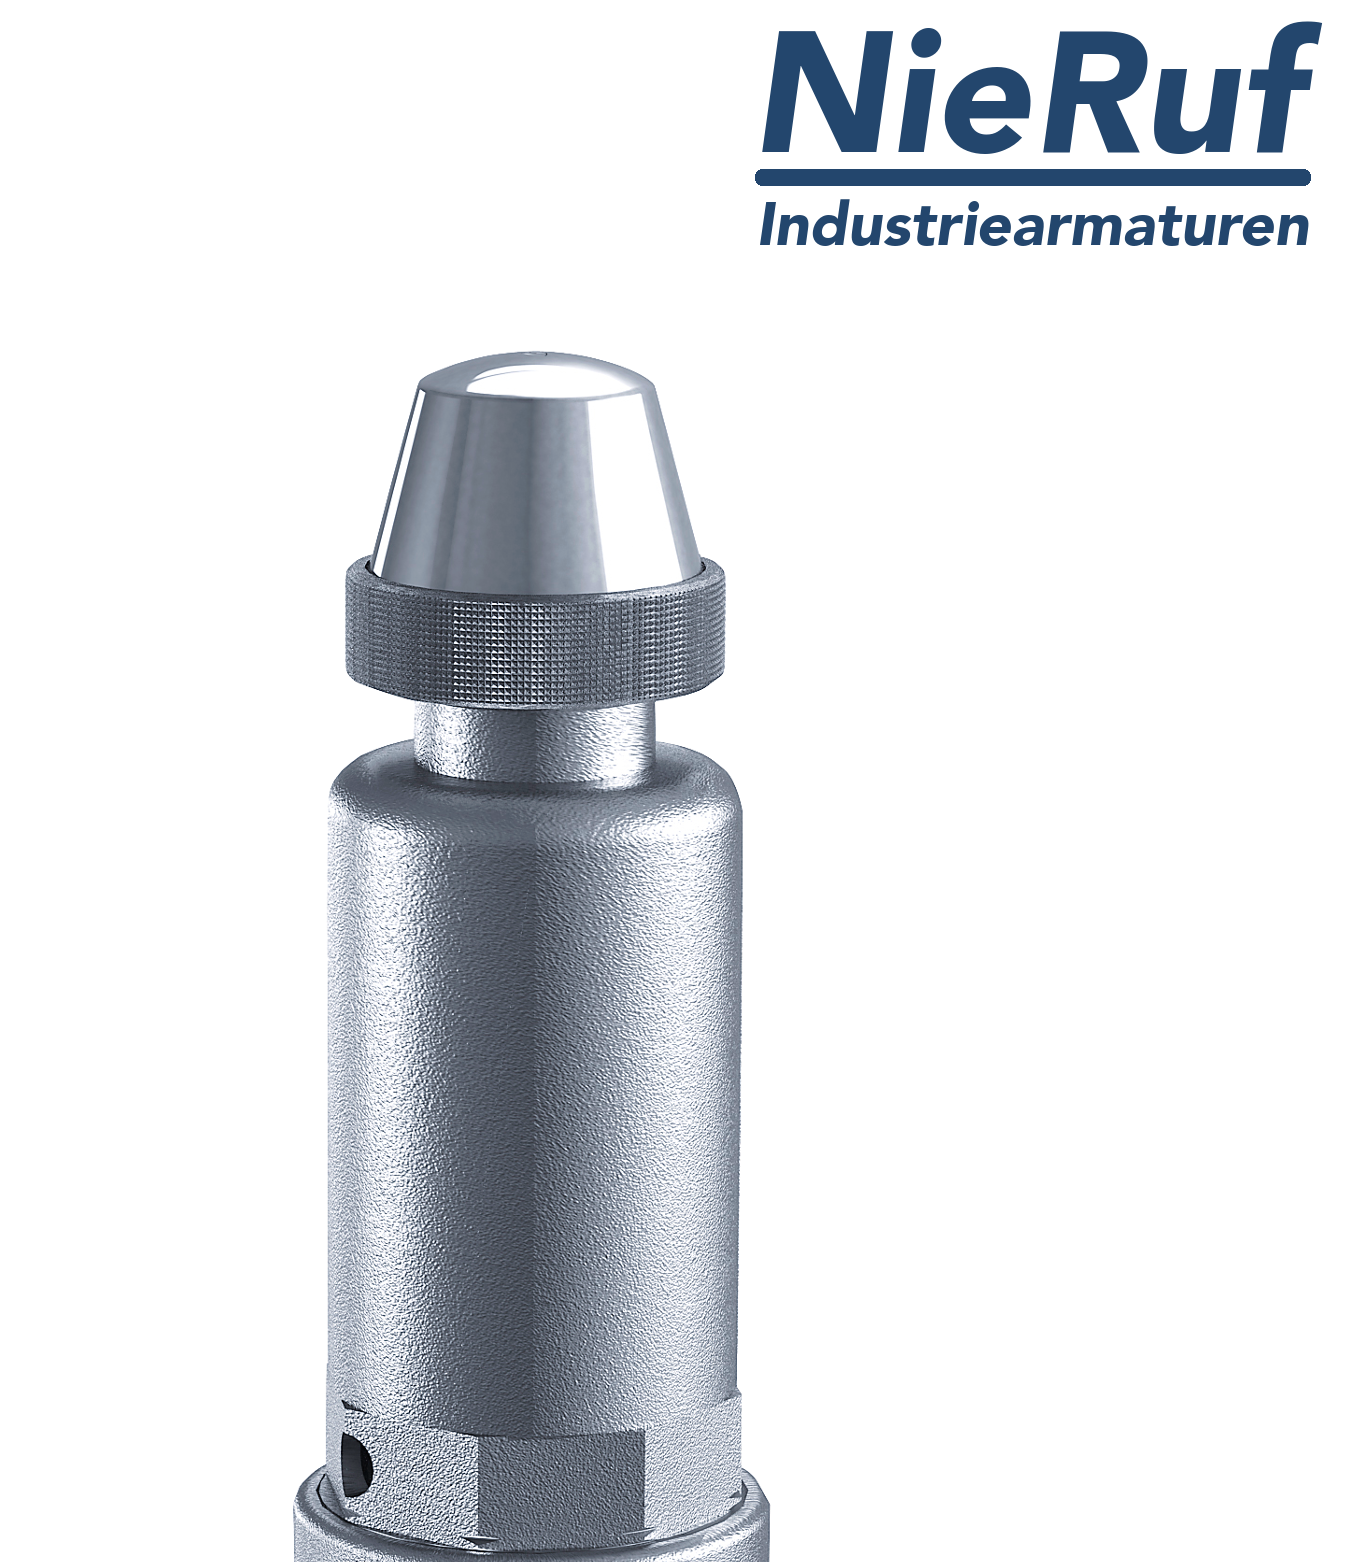 valvola di sicurezza 1/2" x 1" F SV09 fluidi gassosi neutri, acciaio inox NBR